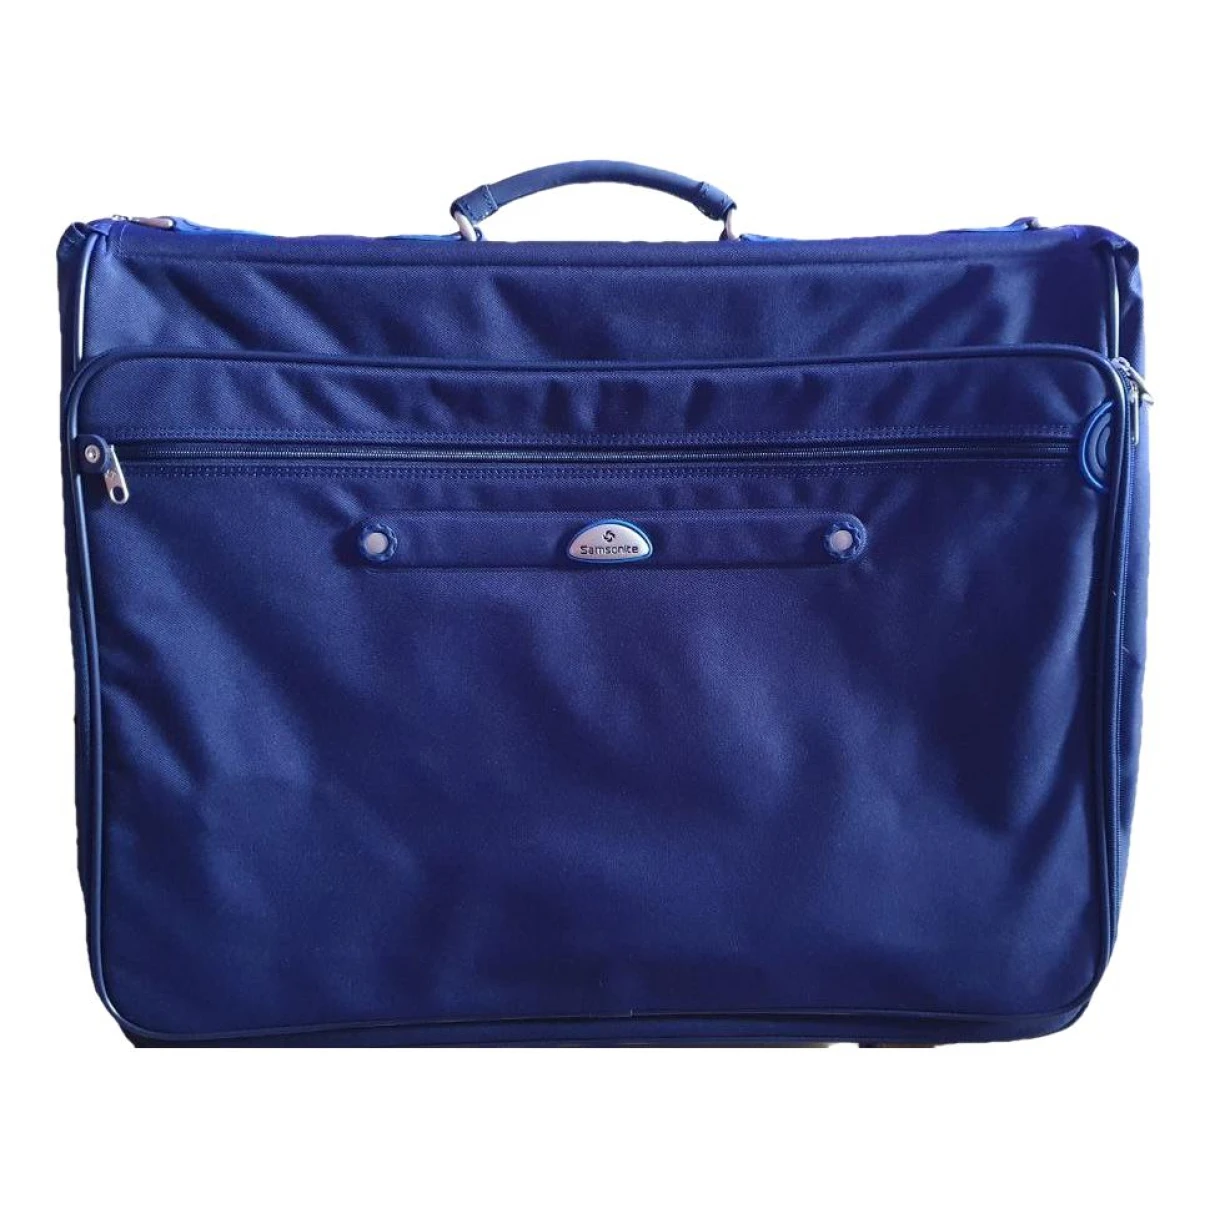 Pre-owned Samsonite Travel Bag In Blue